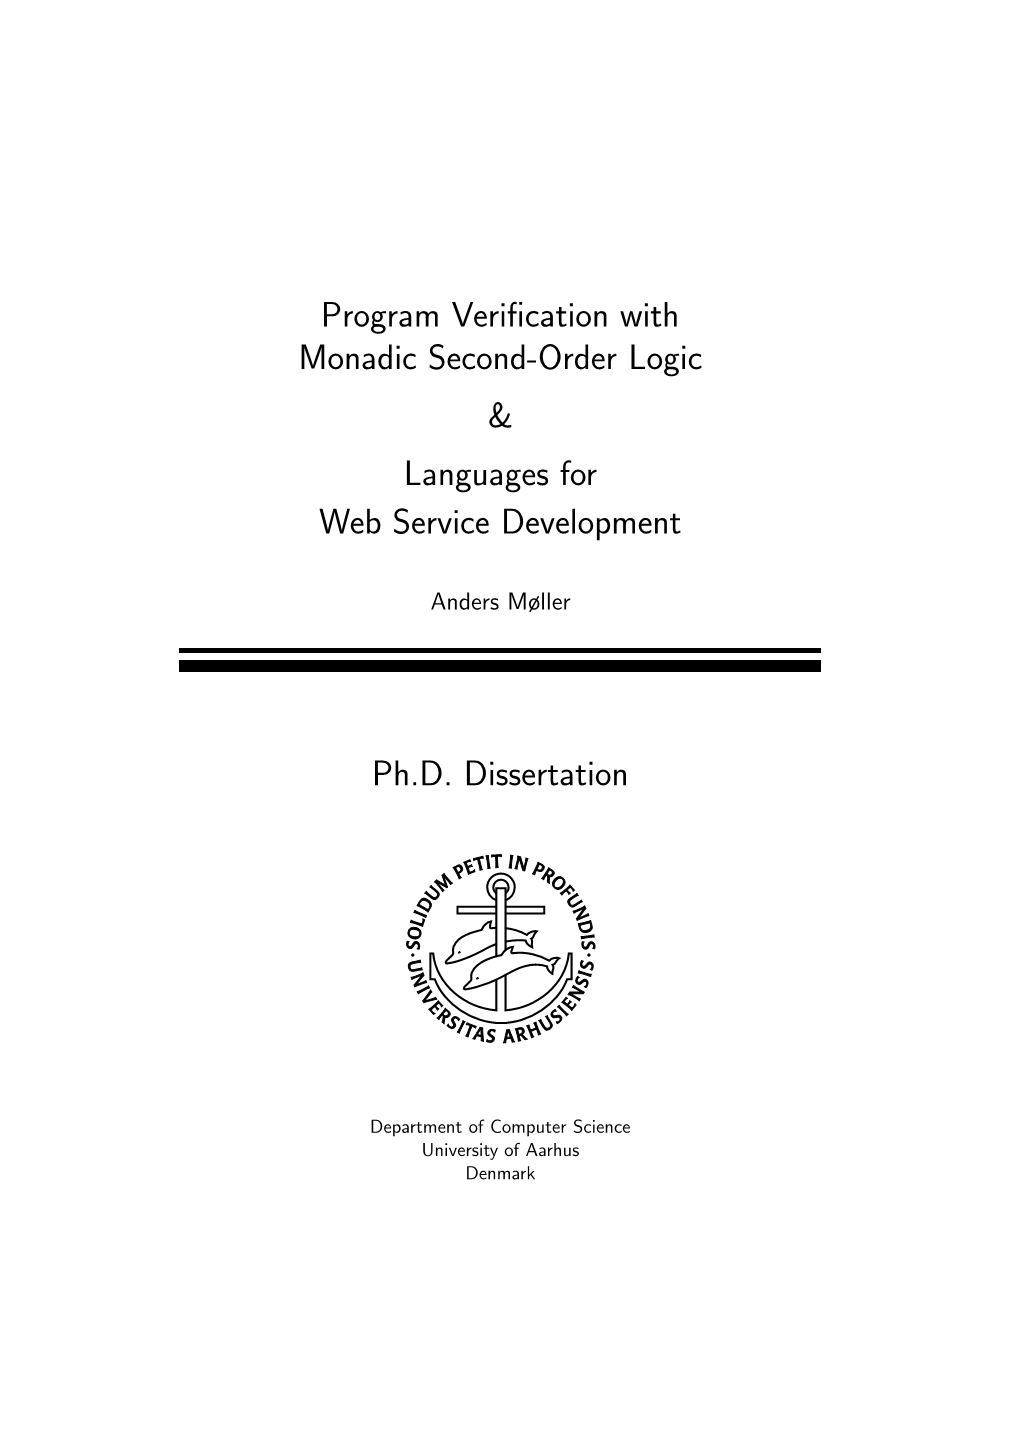 Program Verification with Monadic Second-Order Logic & Languages